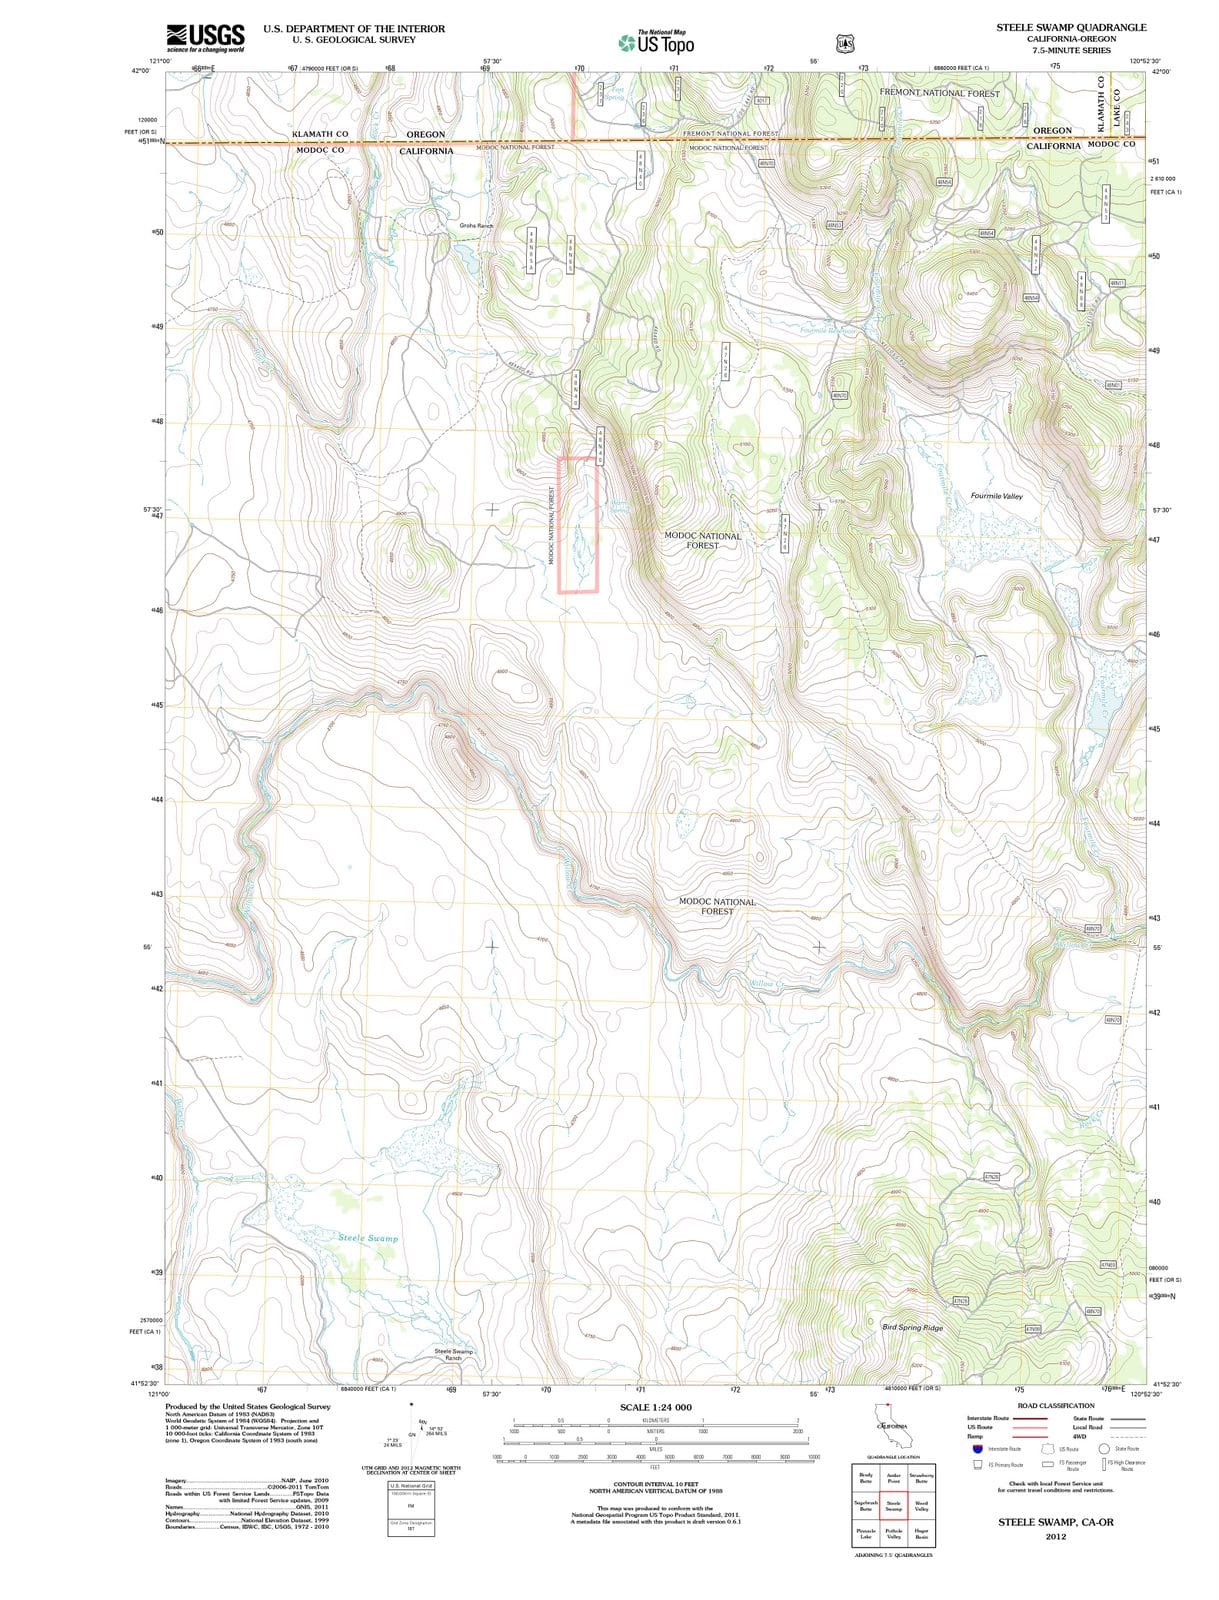 2012 Steeleamp, CA - California - USGS Topographic Map